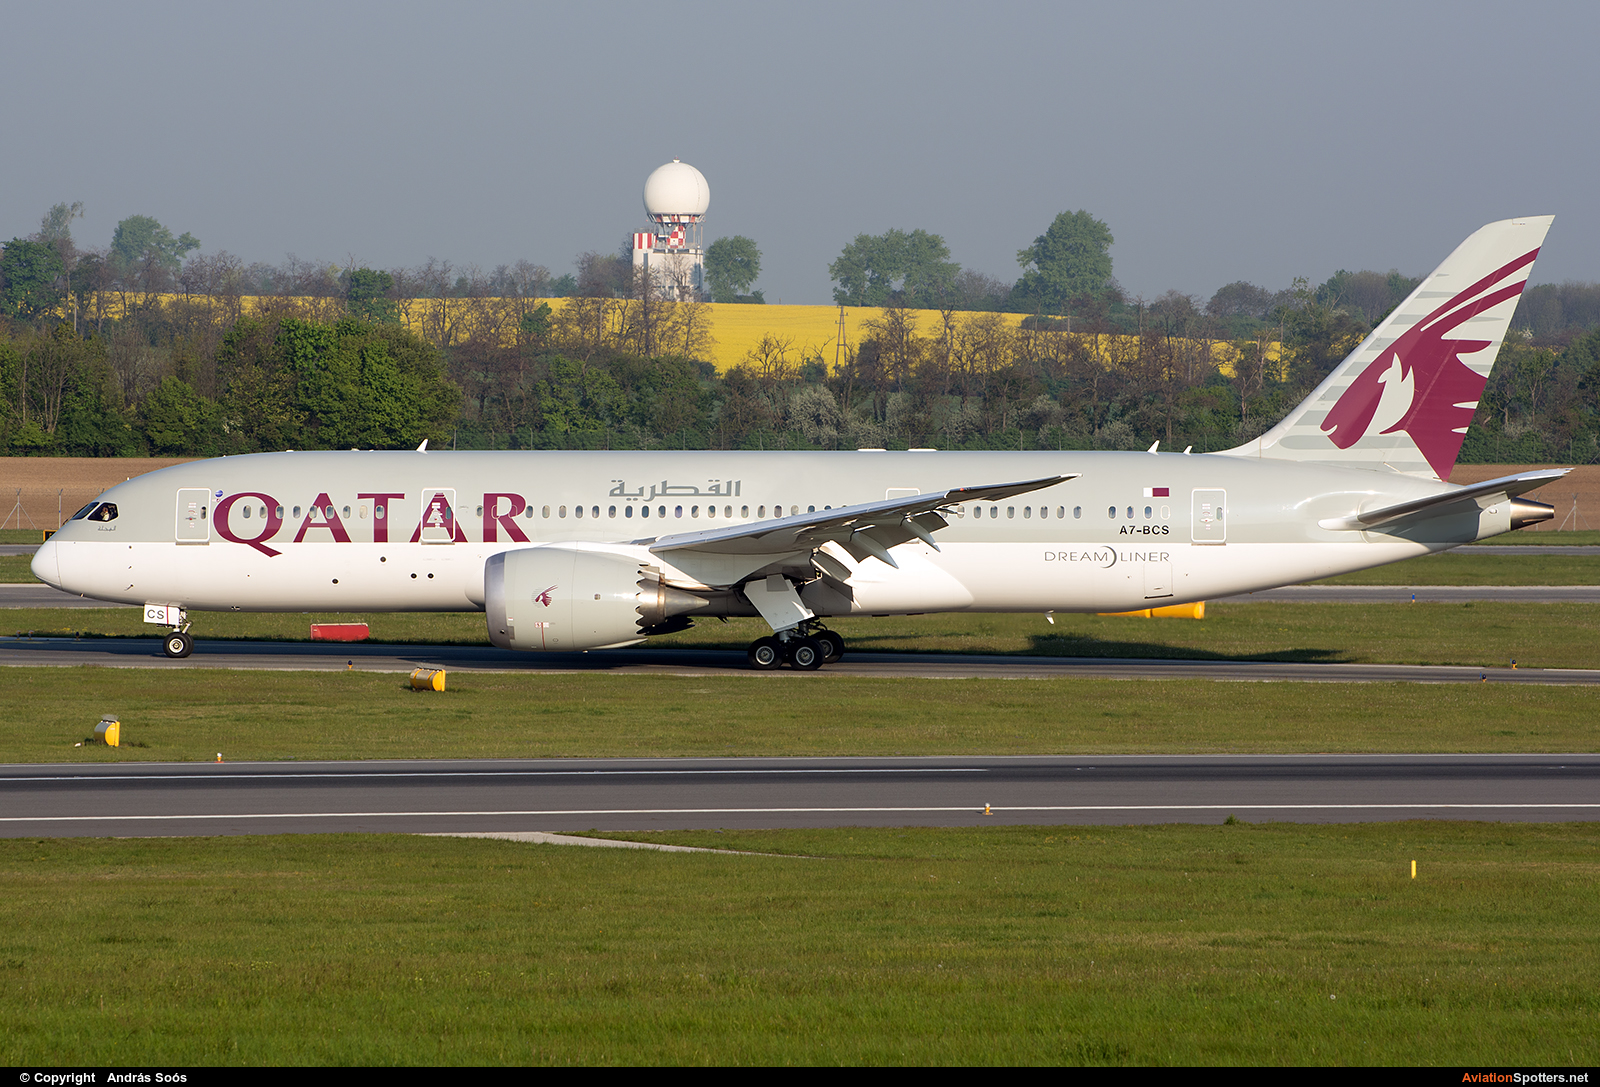 Qatar Airways  -  787-8 Dreamliner  (A7-BCS) By András Soós (sas1965)